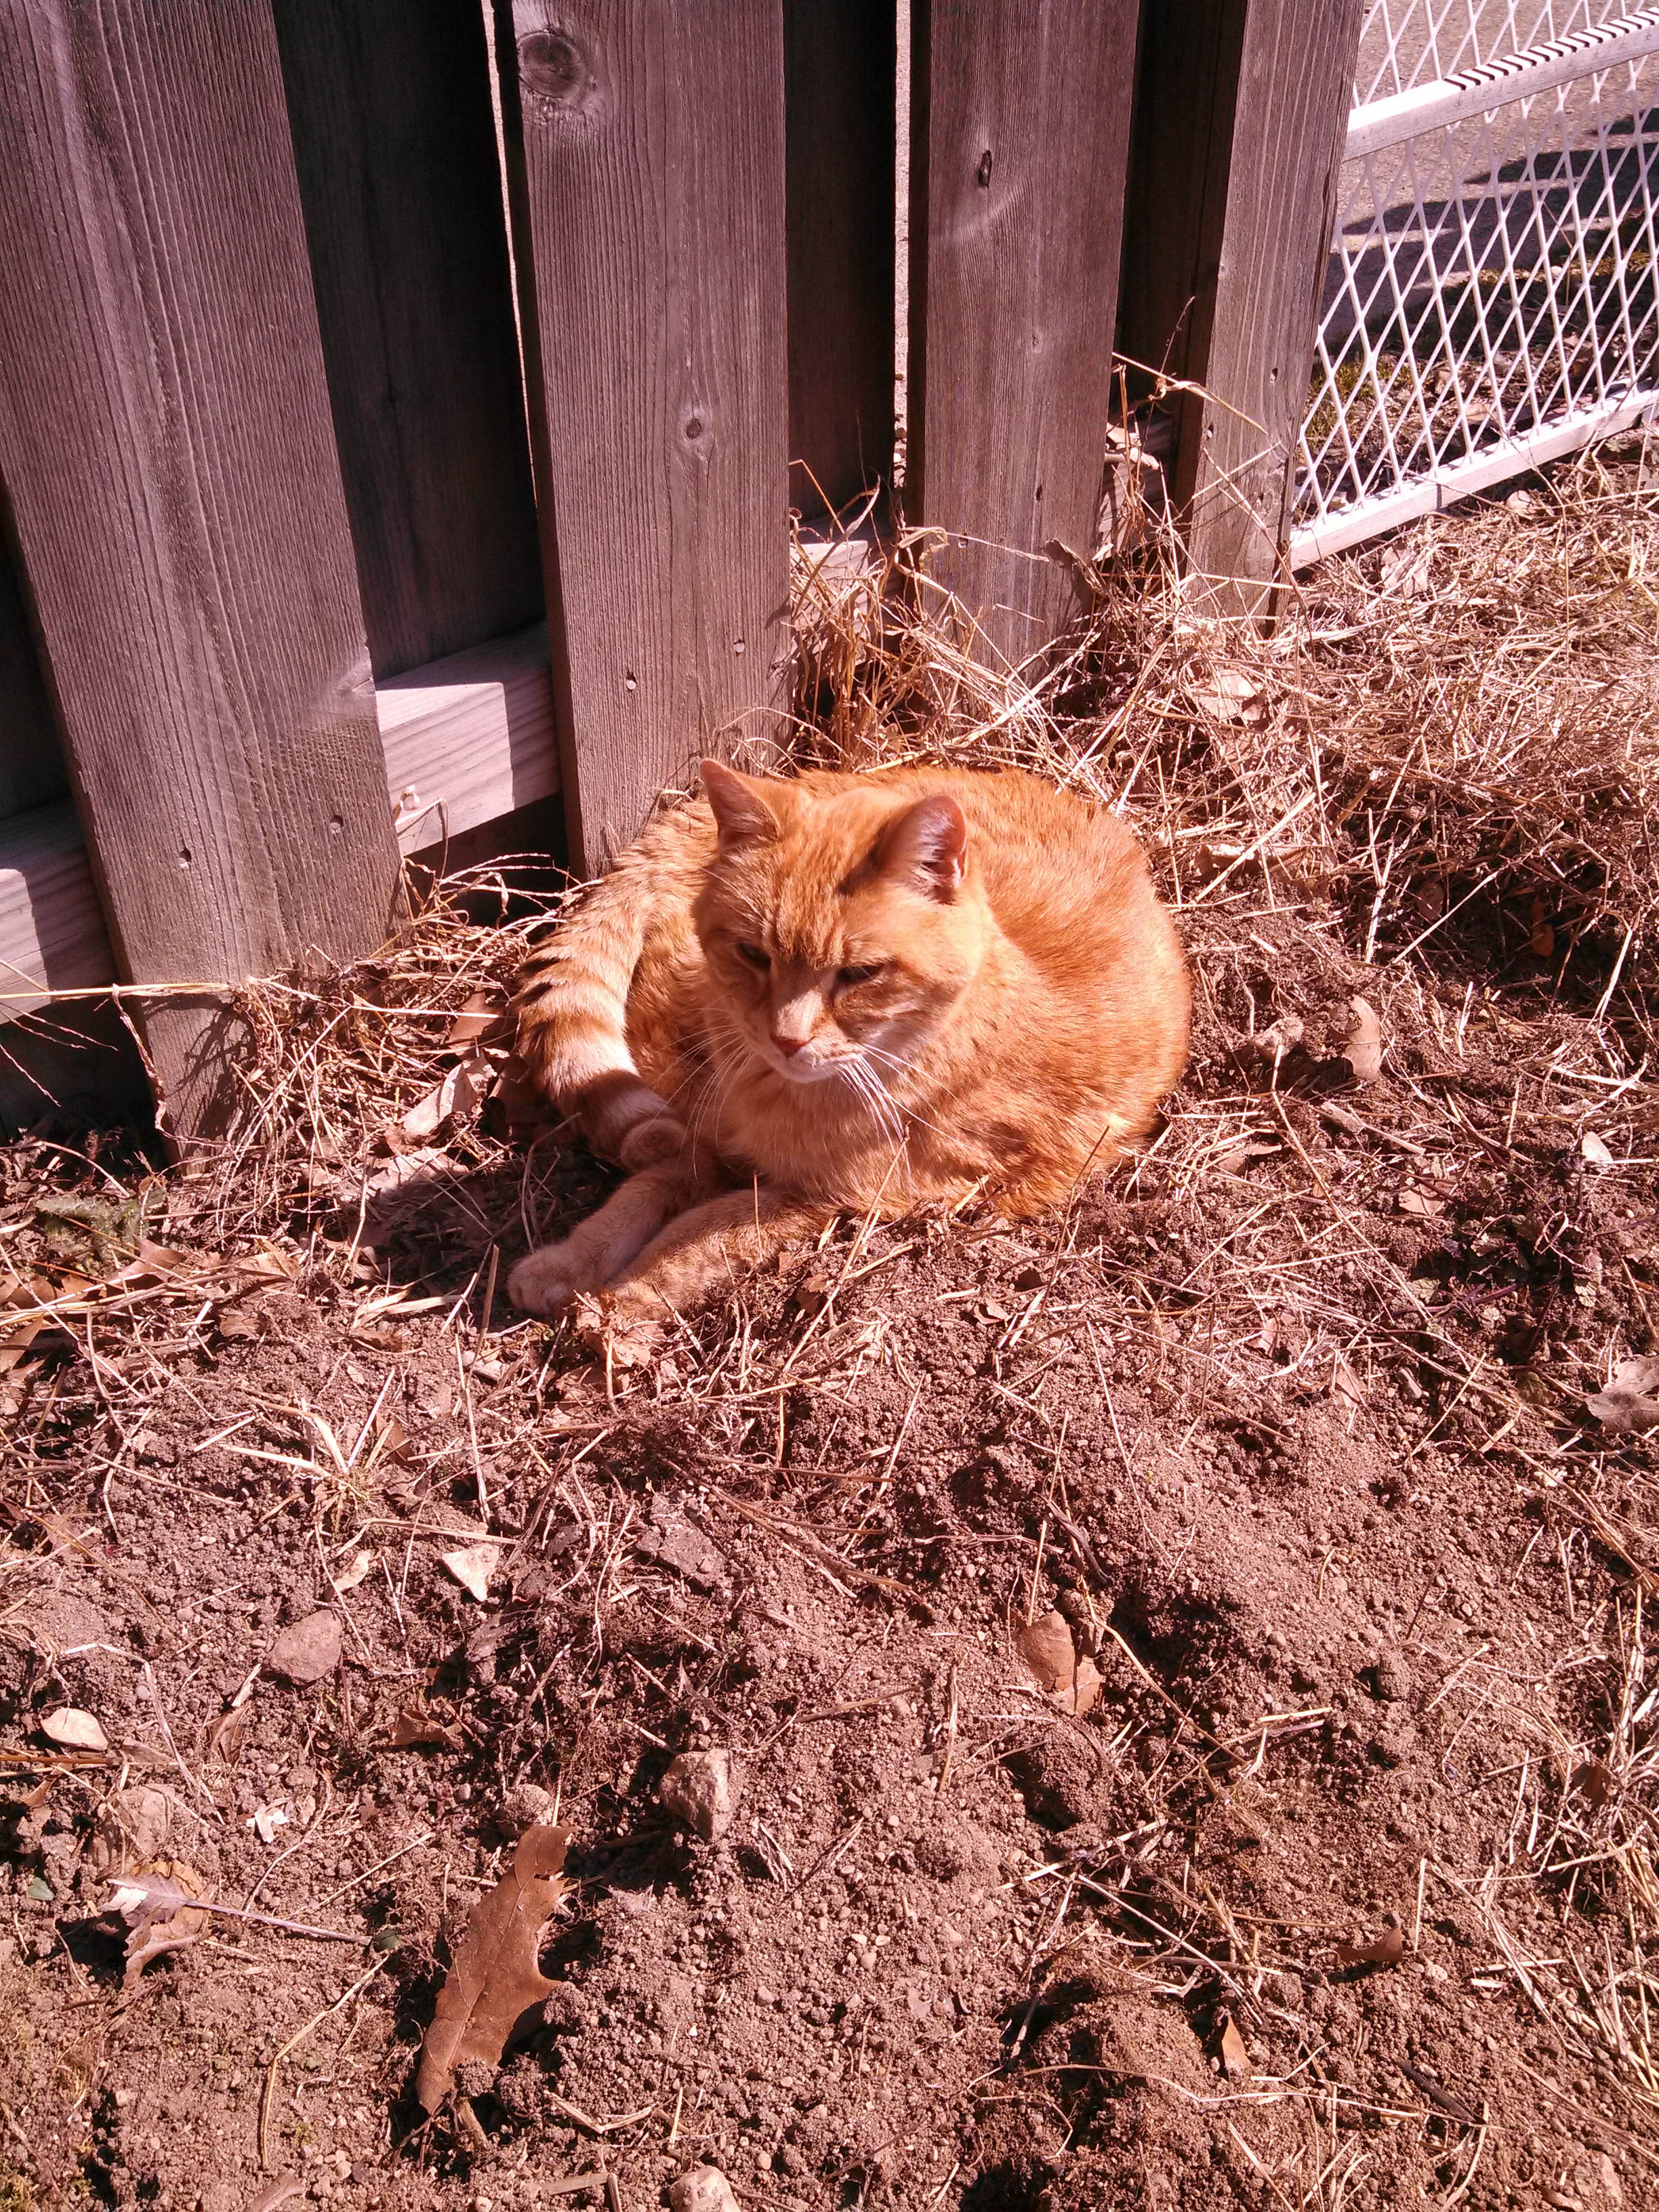 Garfield giving me The Look that says, "I'm awake. Why am I awake? Pet me or let me go back to sleep, Human."